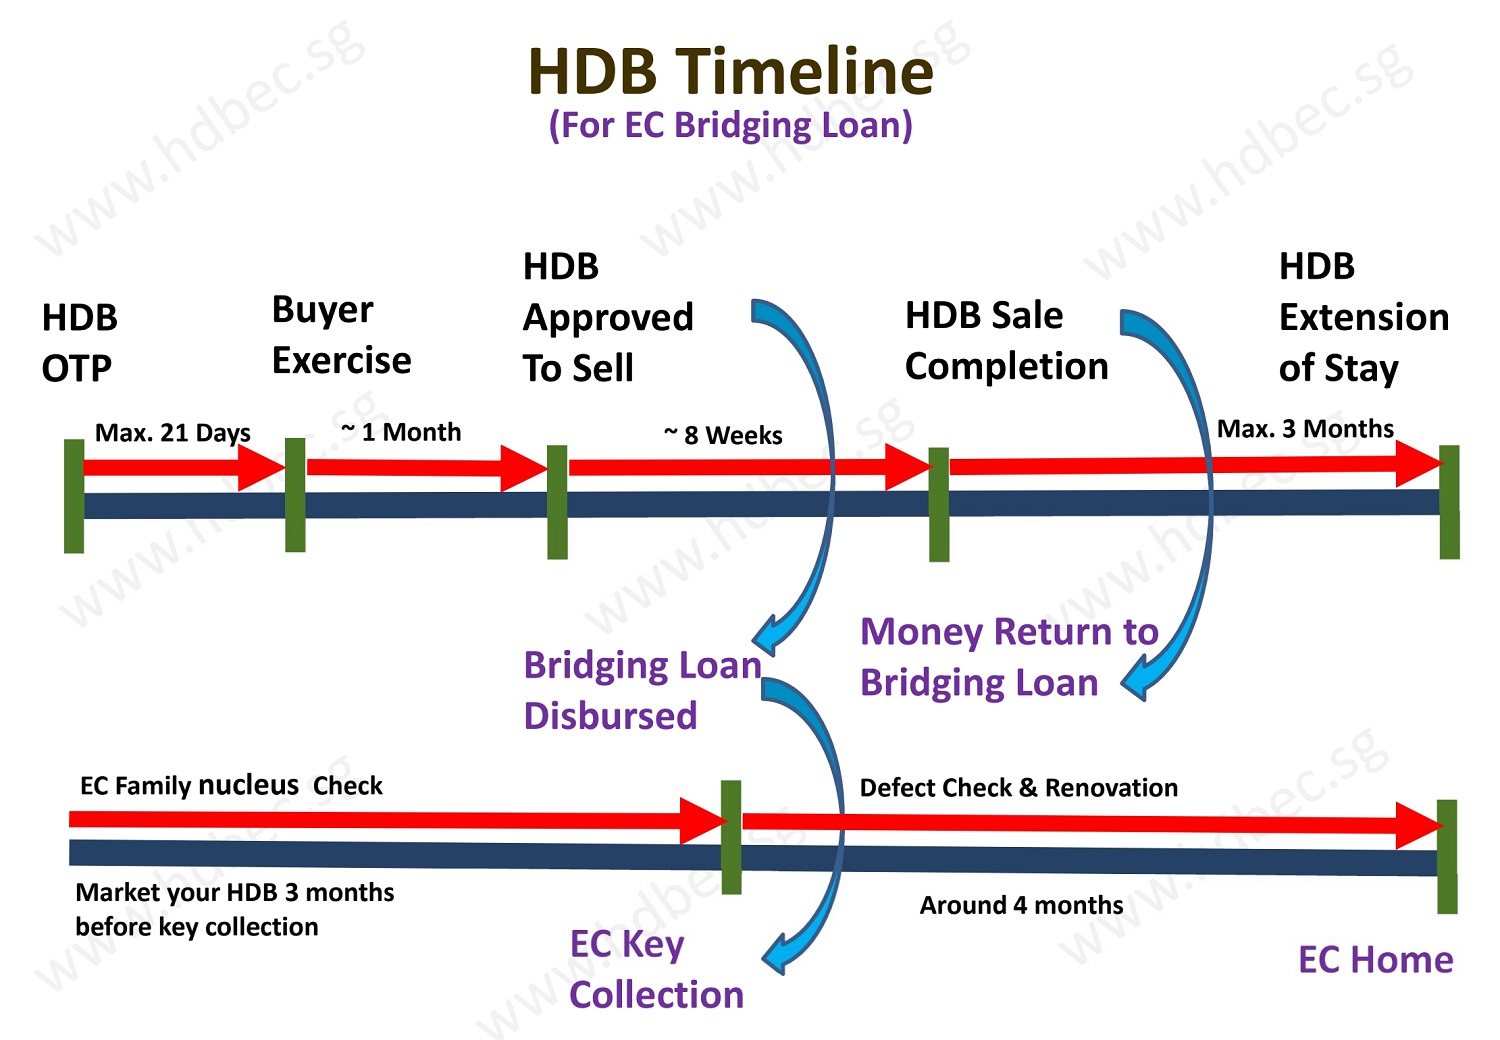 HDB Timeline for EC Deferred Payment Bridging Loan